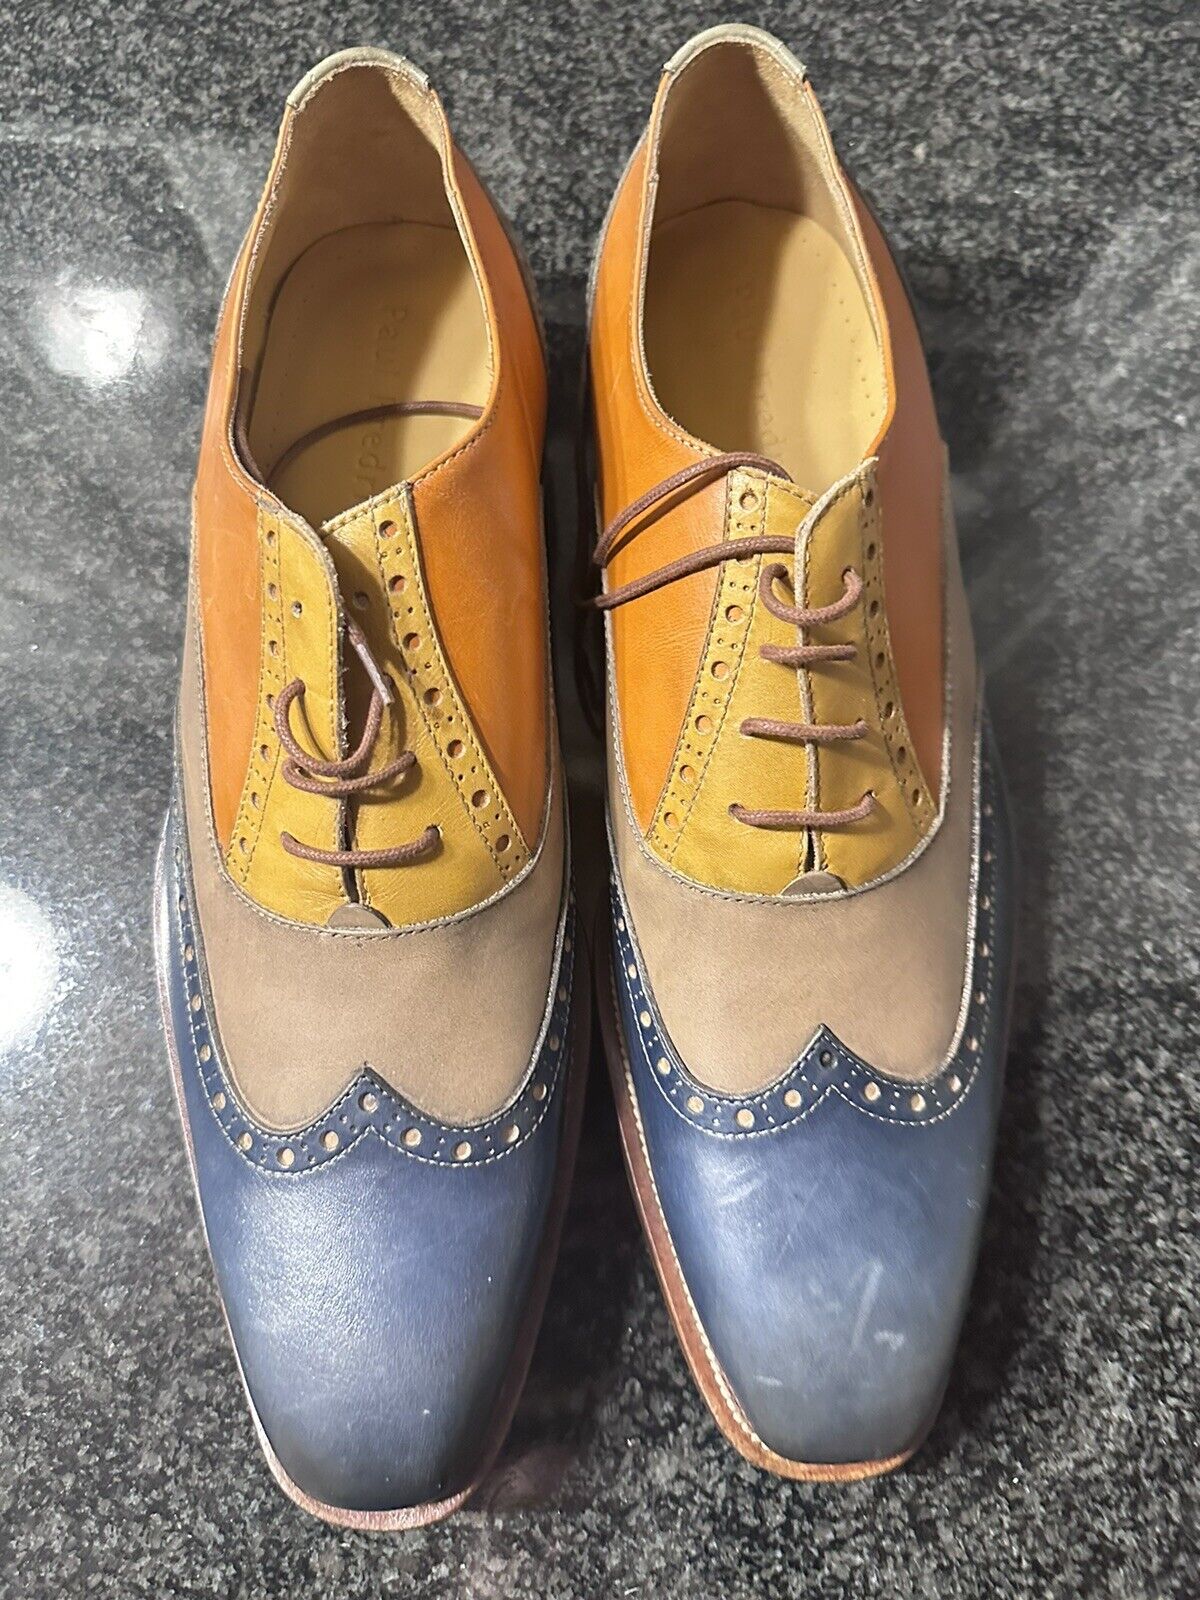 Paul Fredrick Wingtiped Oxford Dress Shoes - image 1